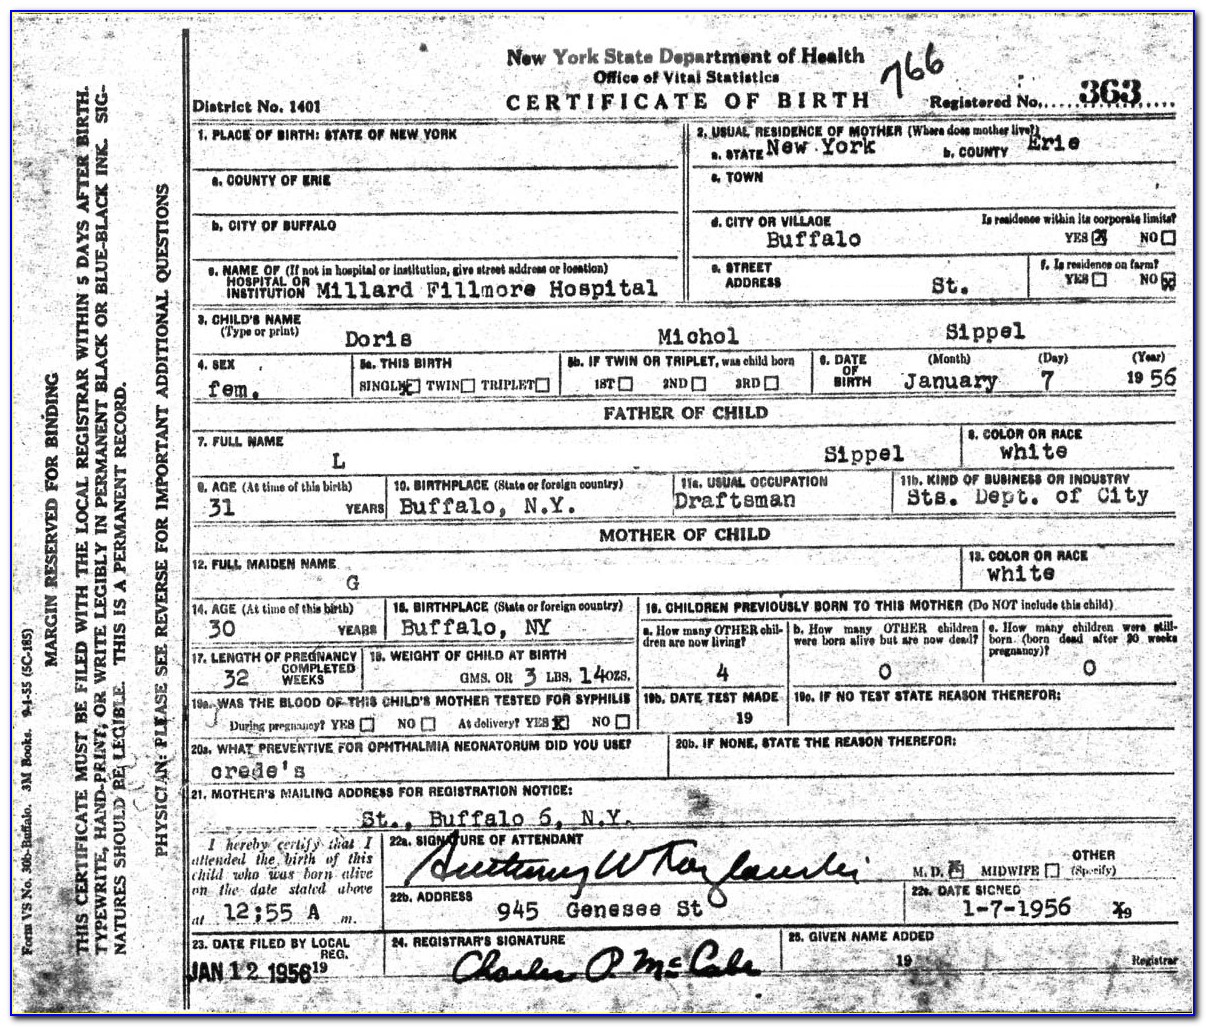 Nassau County Birth Certificate Correction